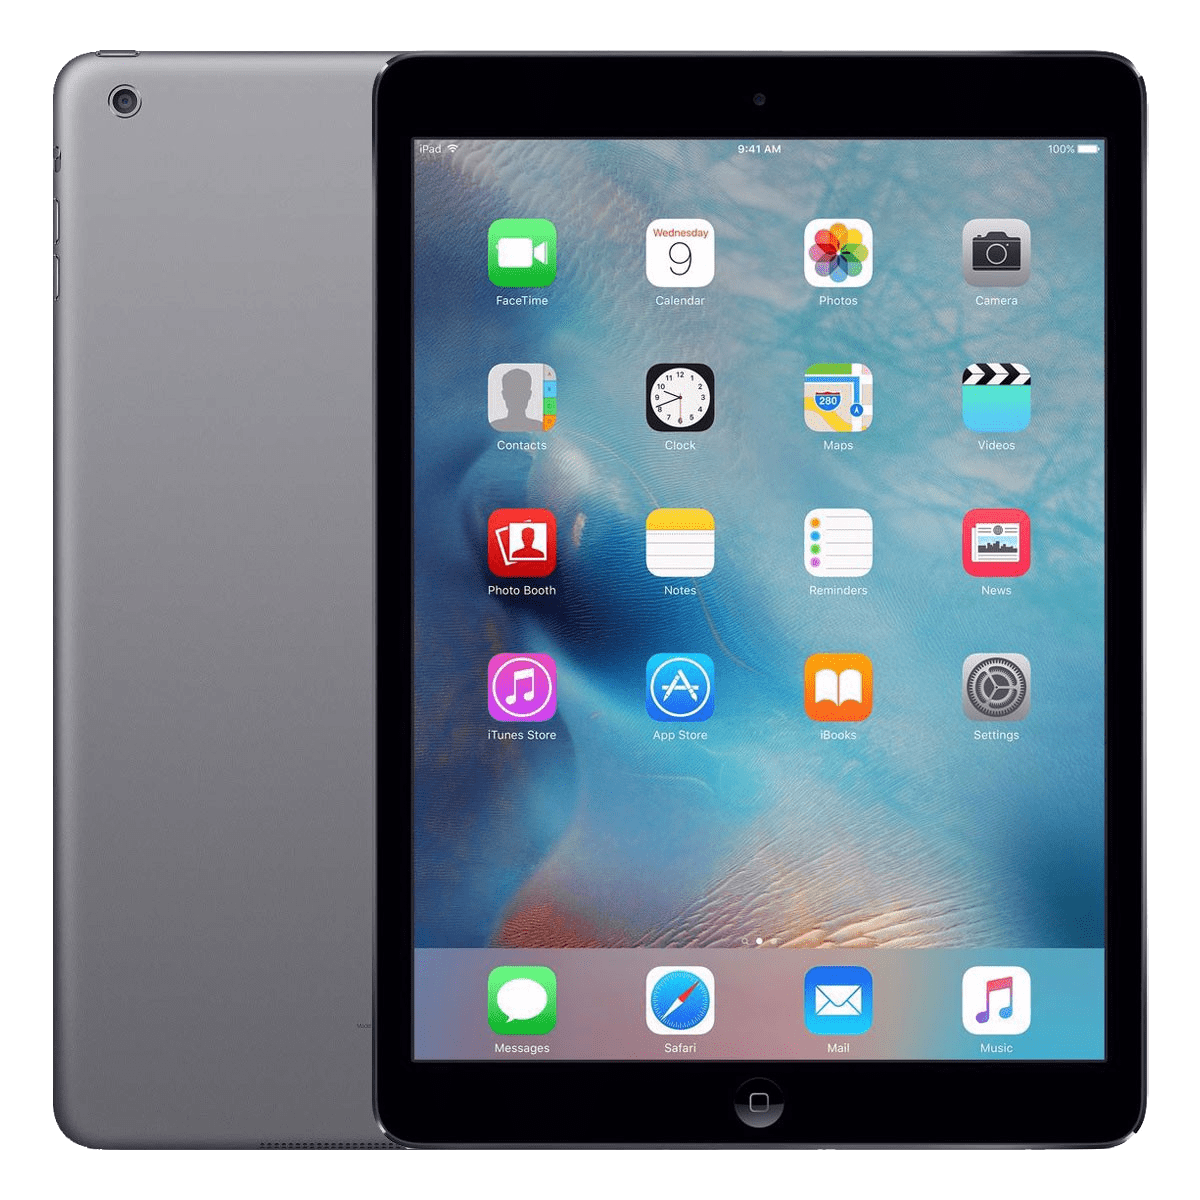 Apple iPad Air 9.7-inch (2013 1st Gen.) (Wi-Fi + Cellular)